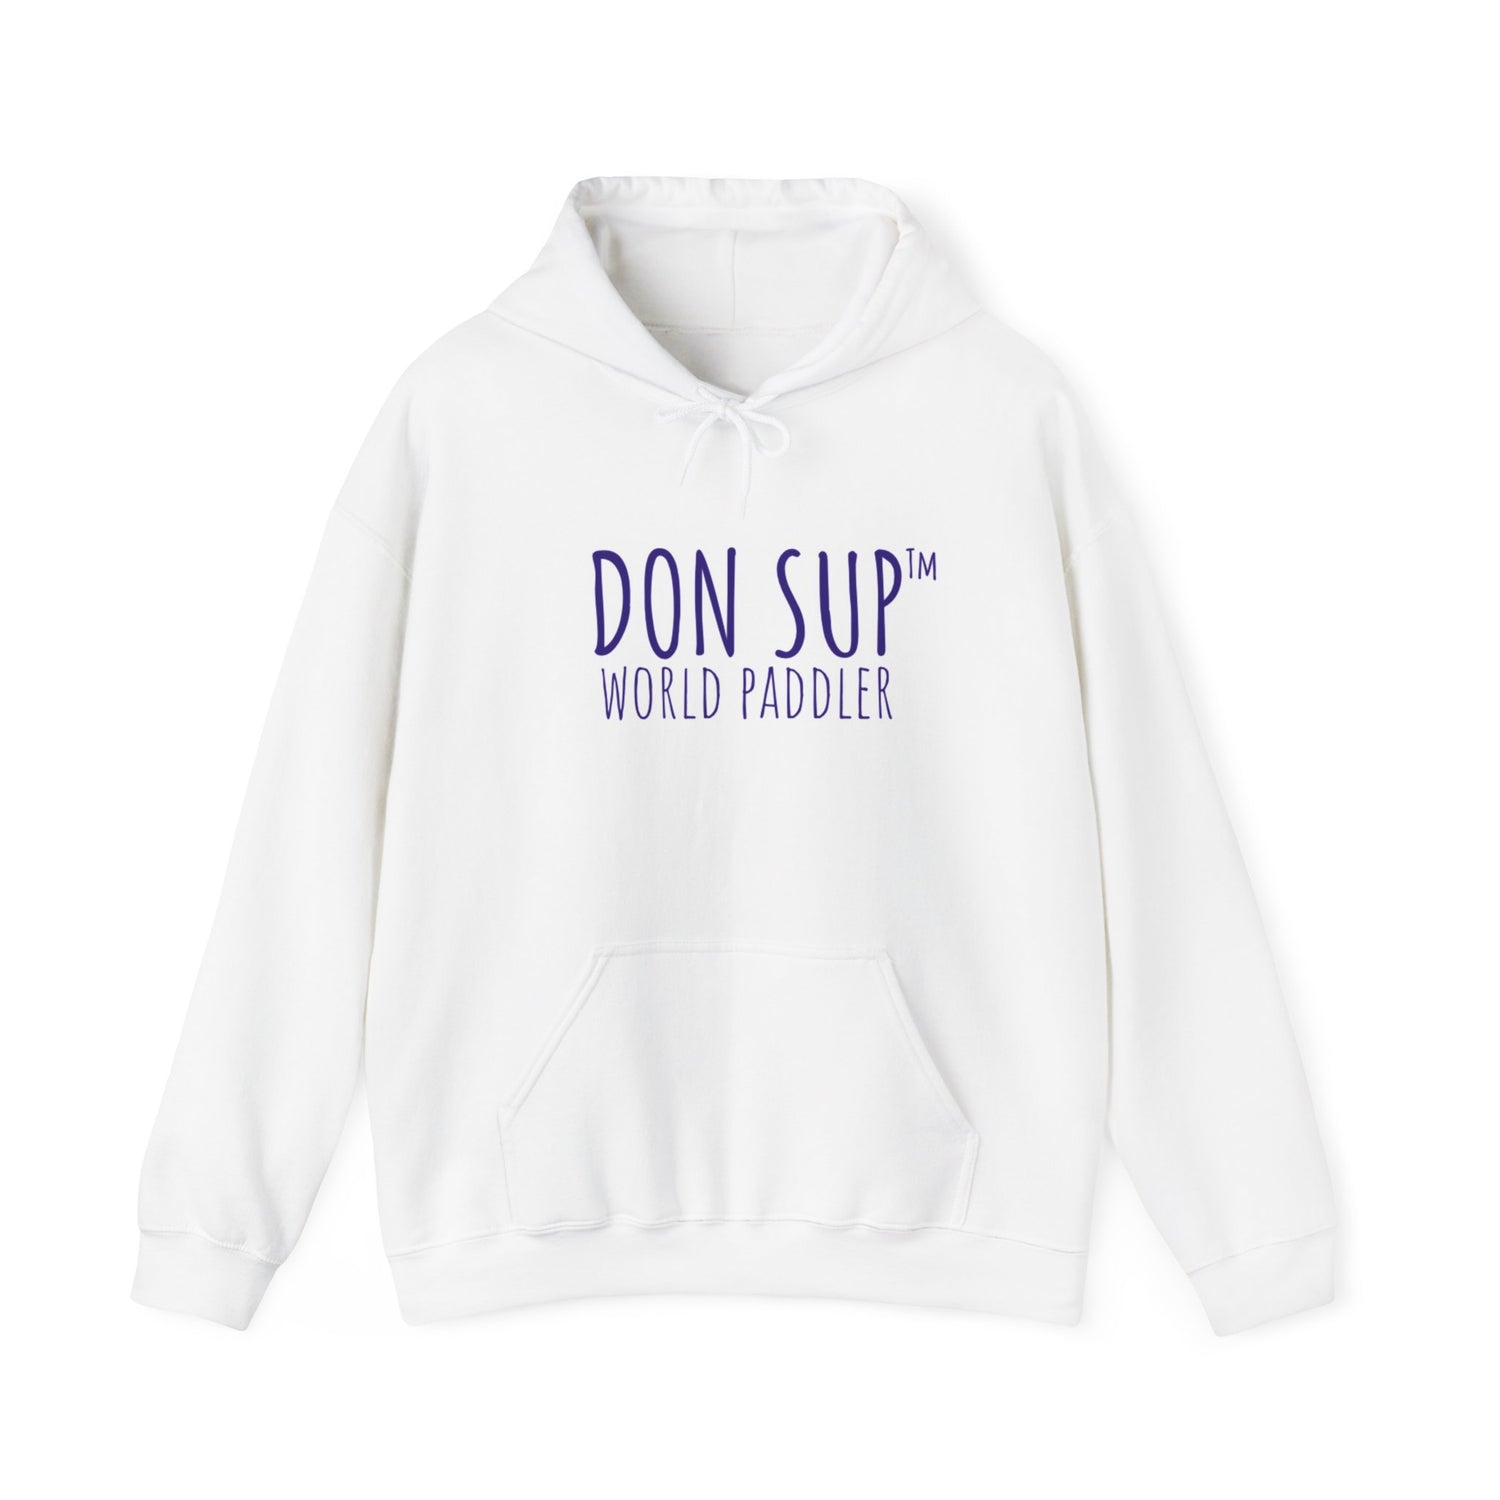 SunRise by DON SUP Hooded Sweatshirt